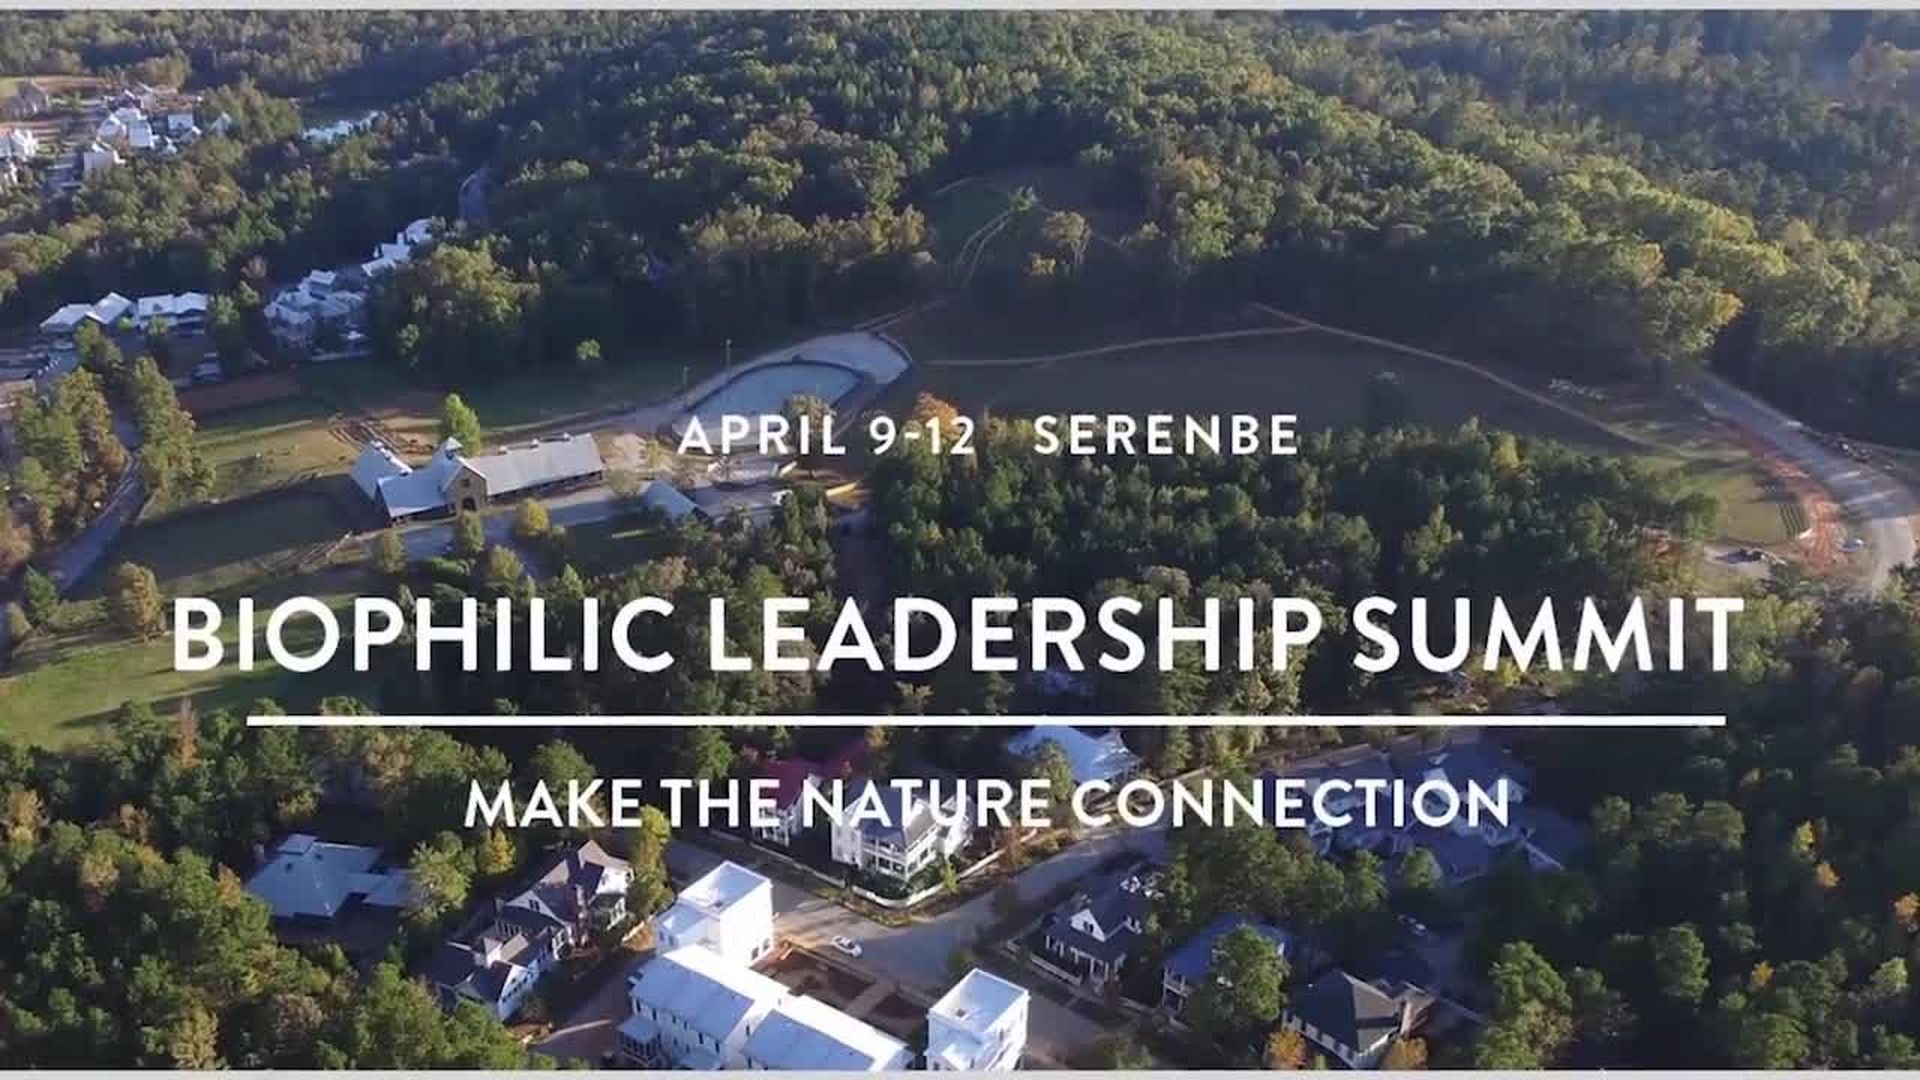 Biophilic Leadership Summit Overview